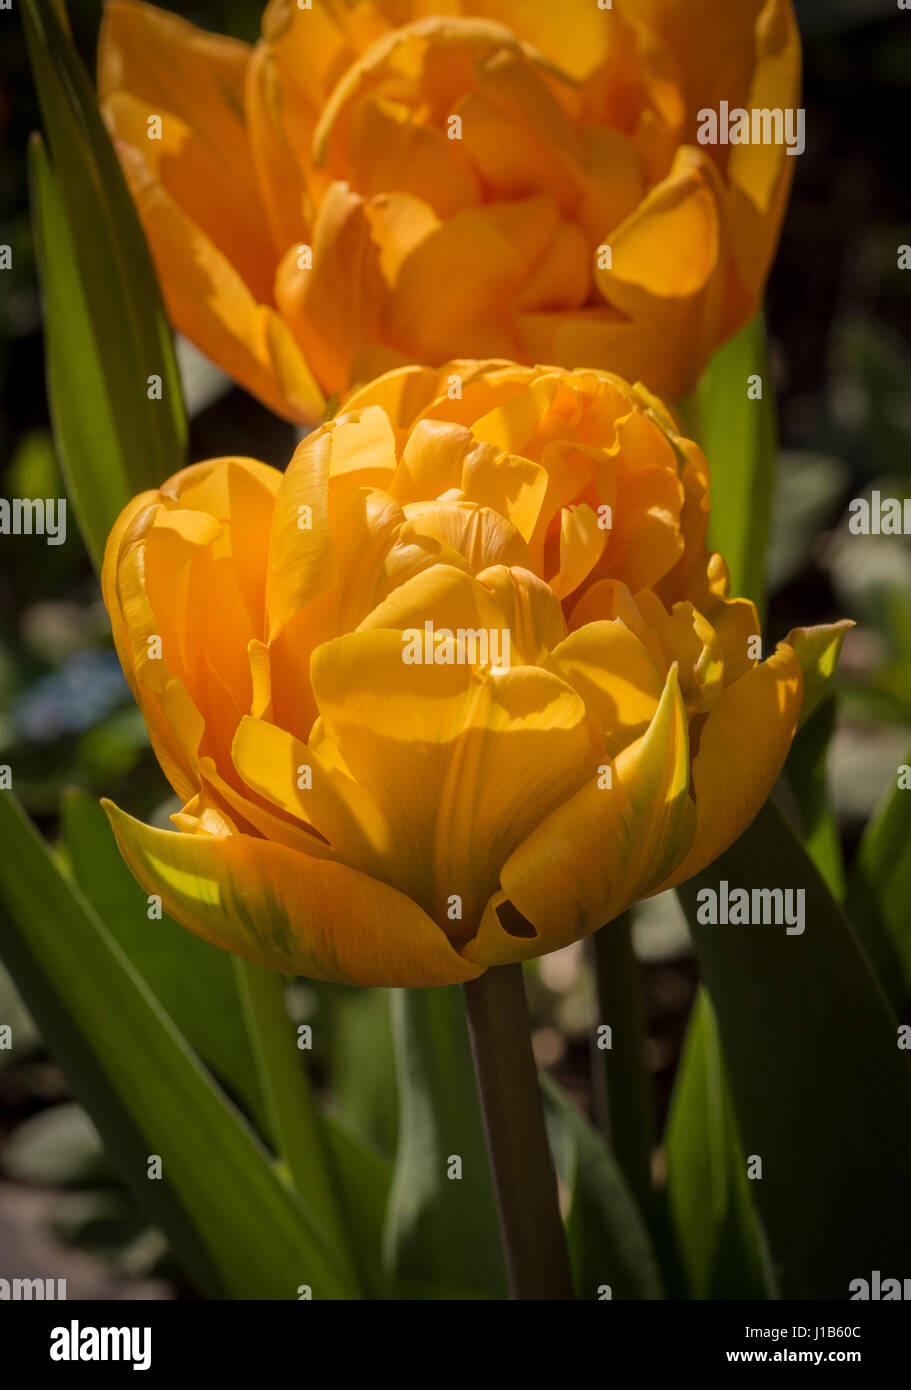 Two Orange Princess tulip flowers growing in a garden. Stock Photo